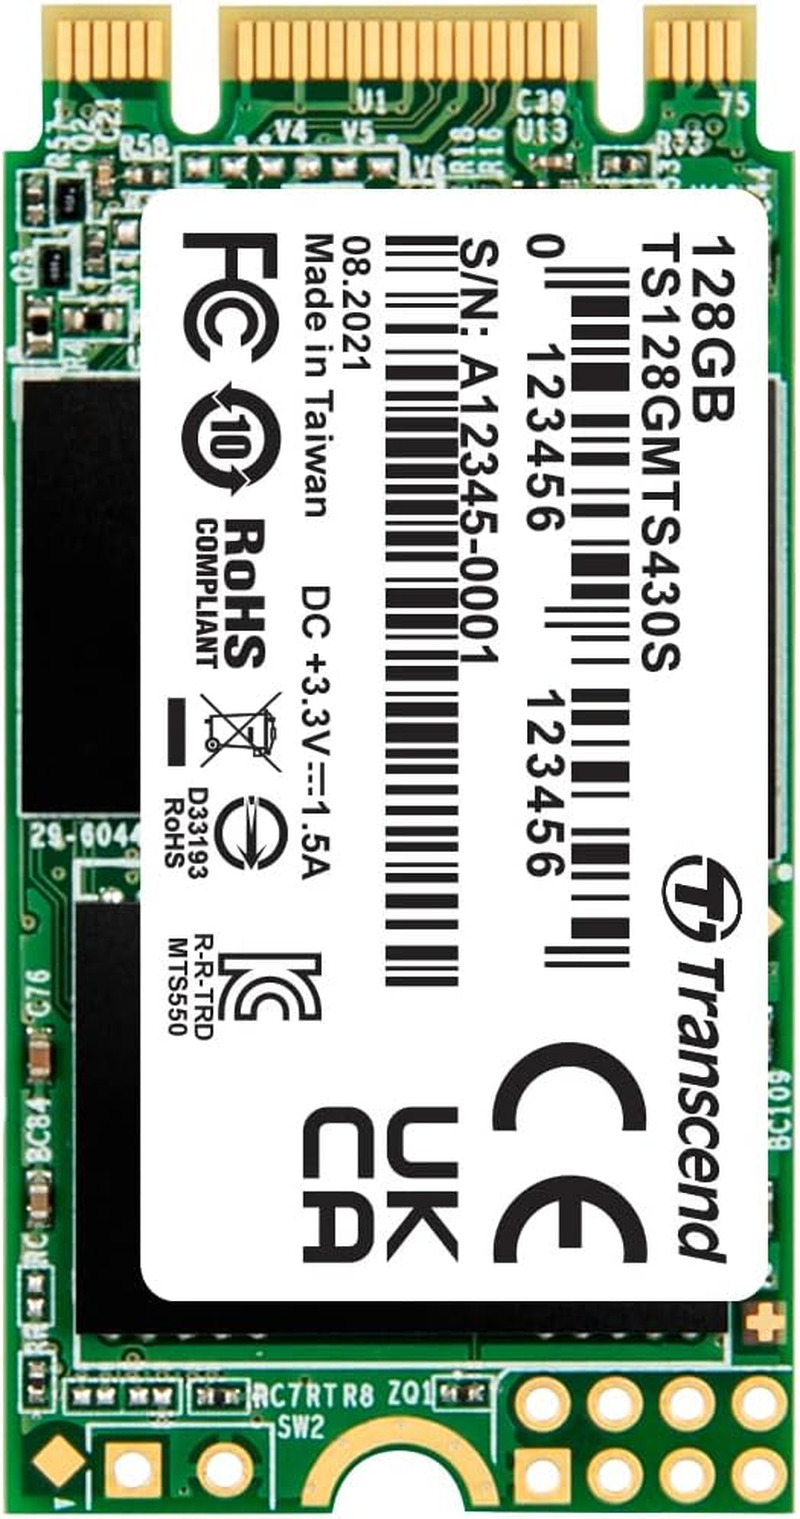 Transcend TS128GMTS430S 128GB M.2 2242 SATAIII B+M Key MTS430S Solid State Drive